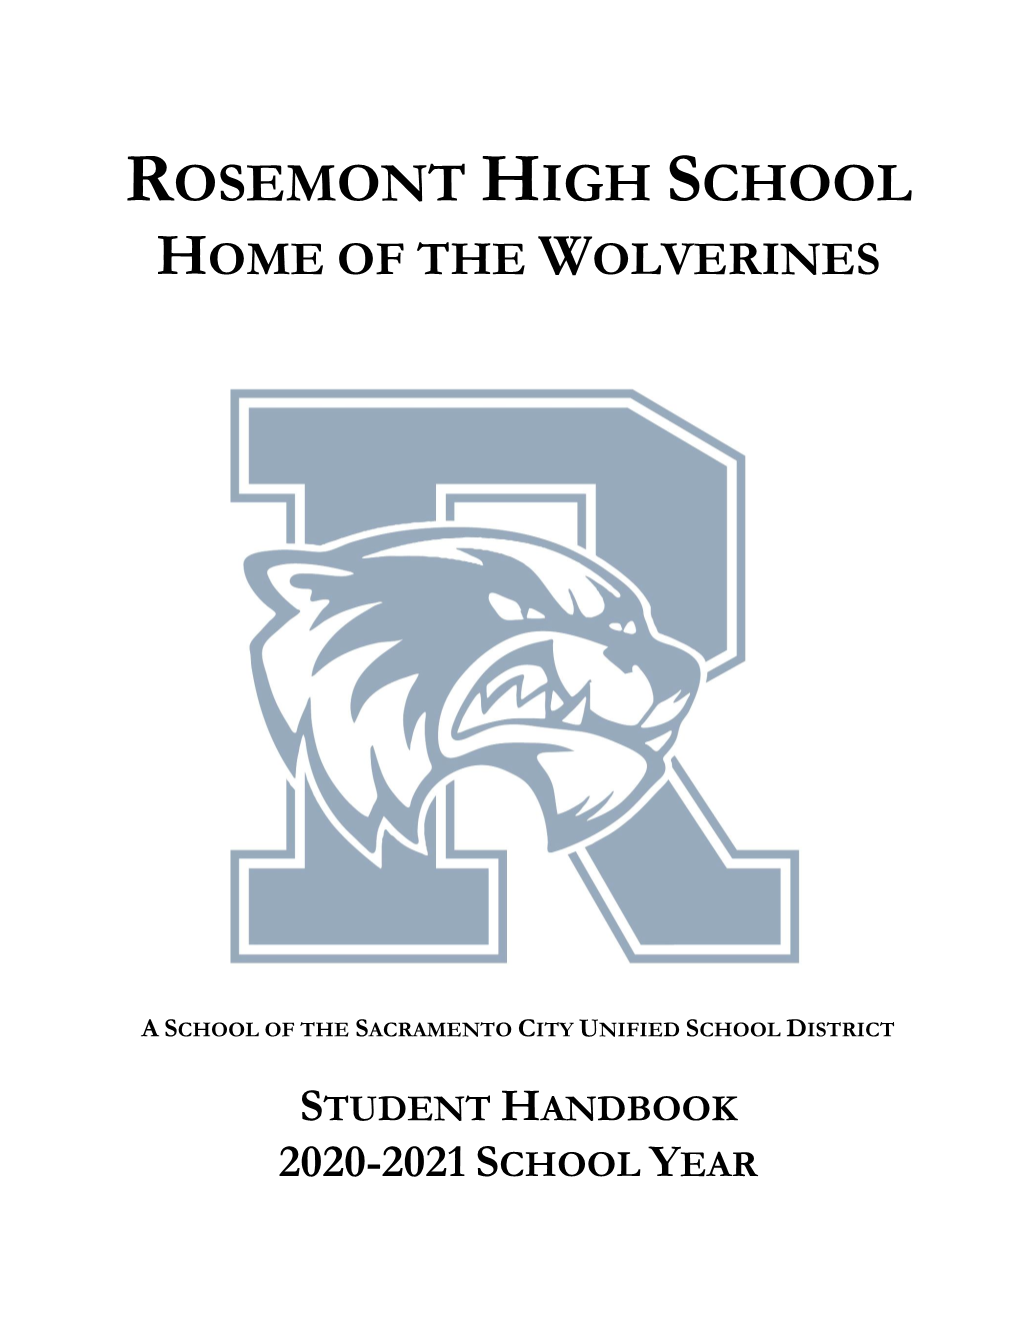 Student Handbook 2020-2021 School Year Rosemont High School Student Handbook